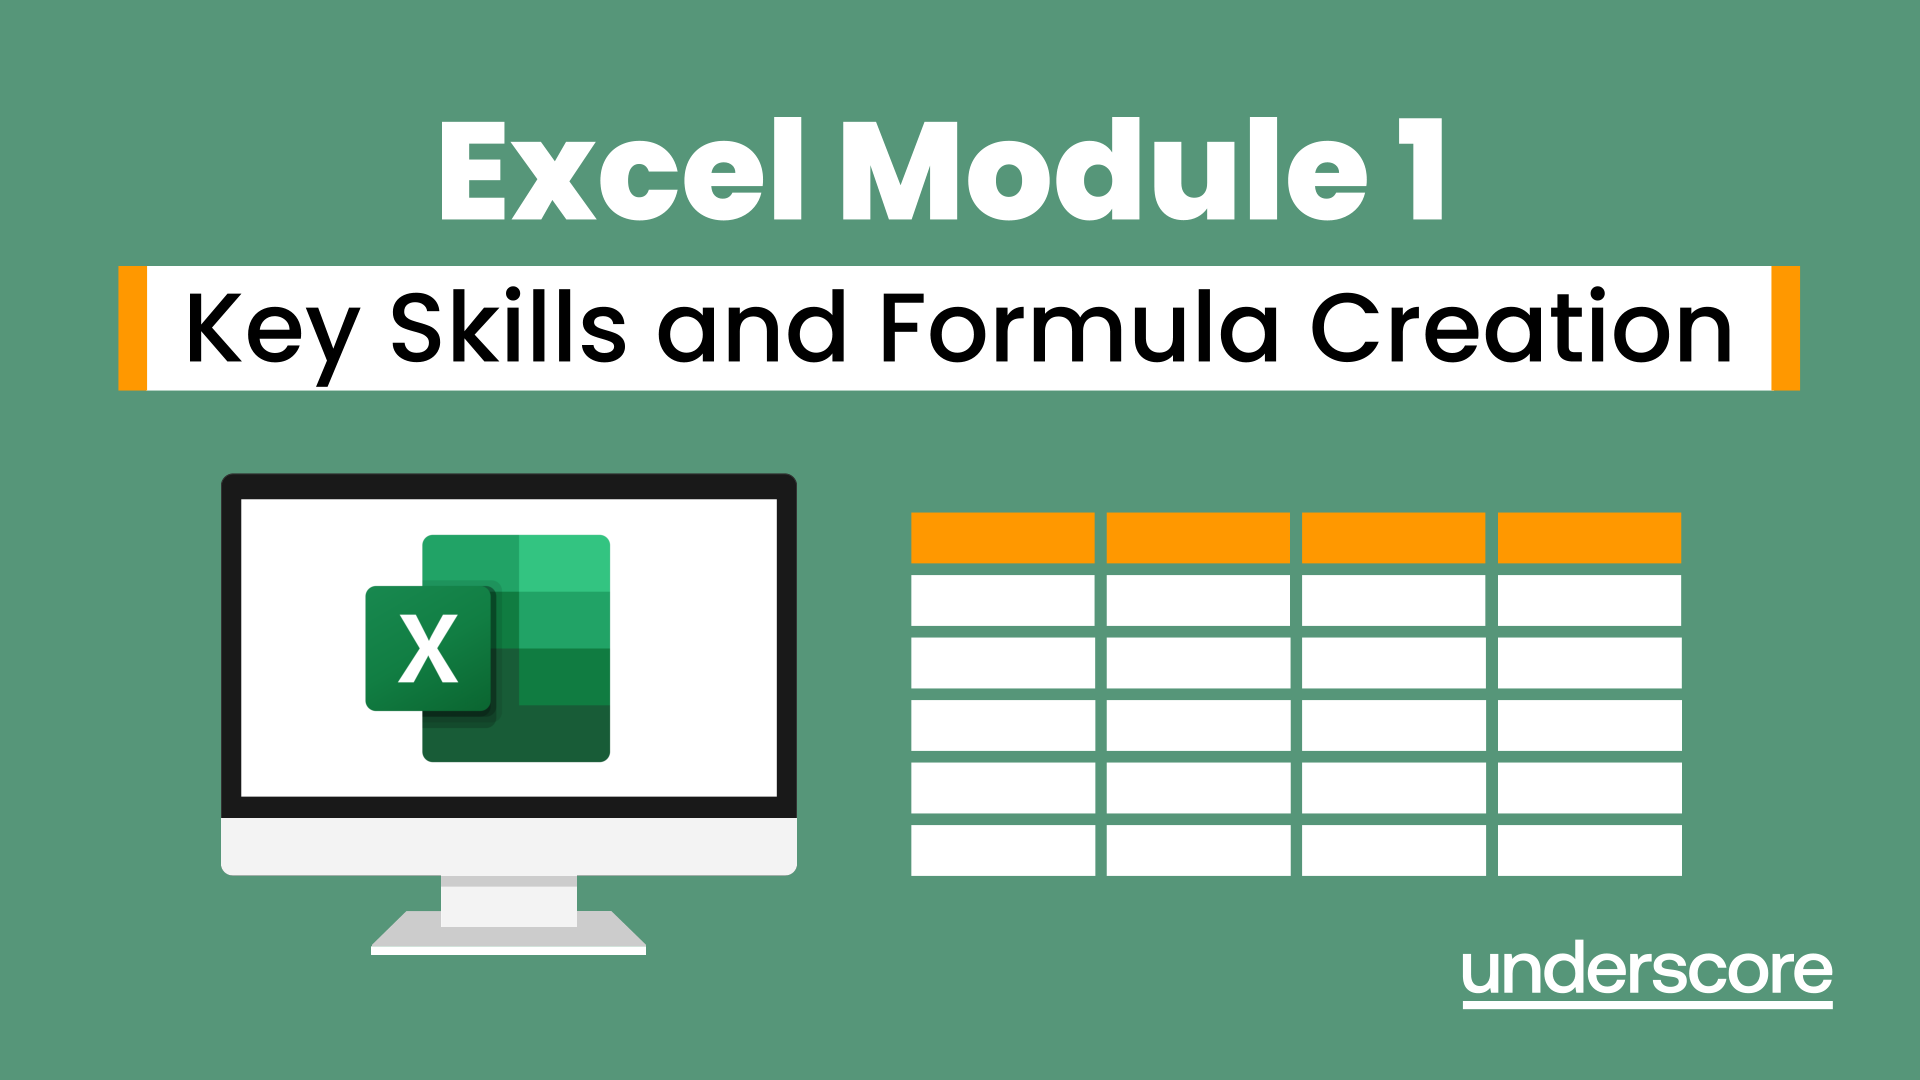 Excel Module 1 - Key Skills and Formula Creation